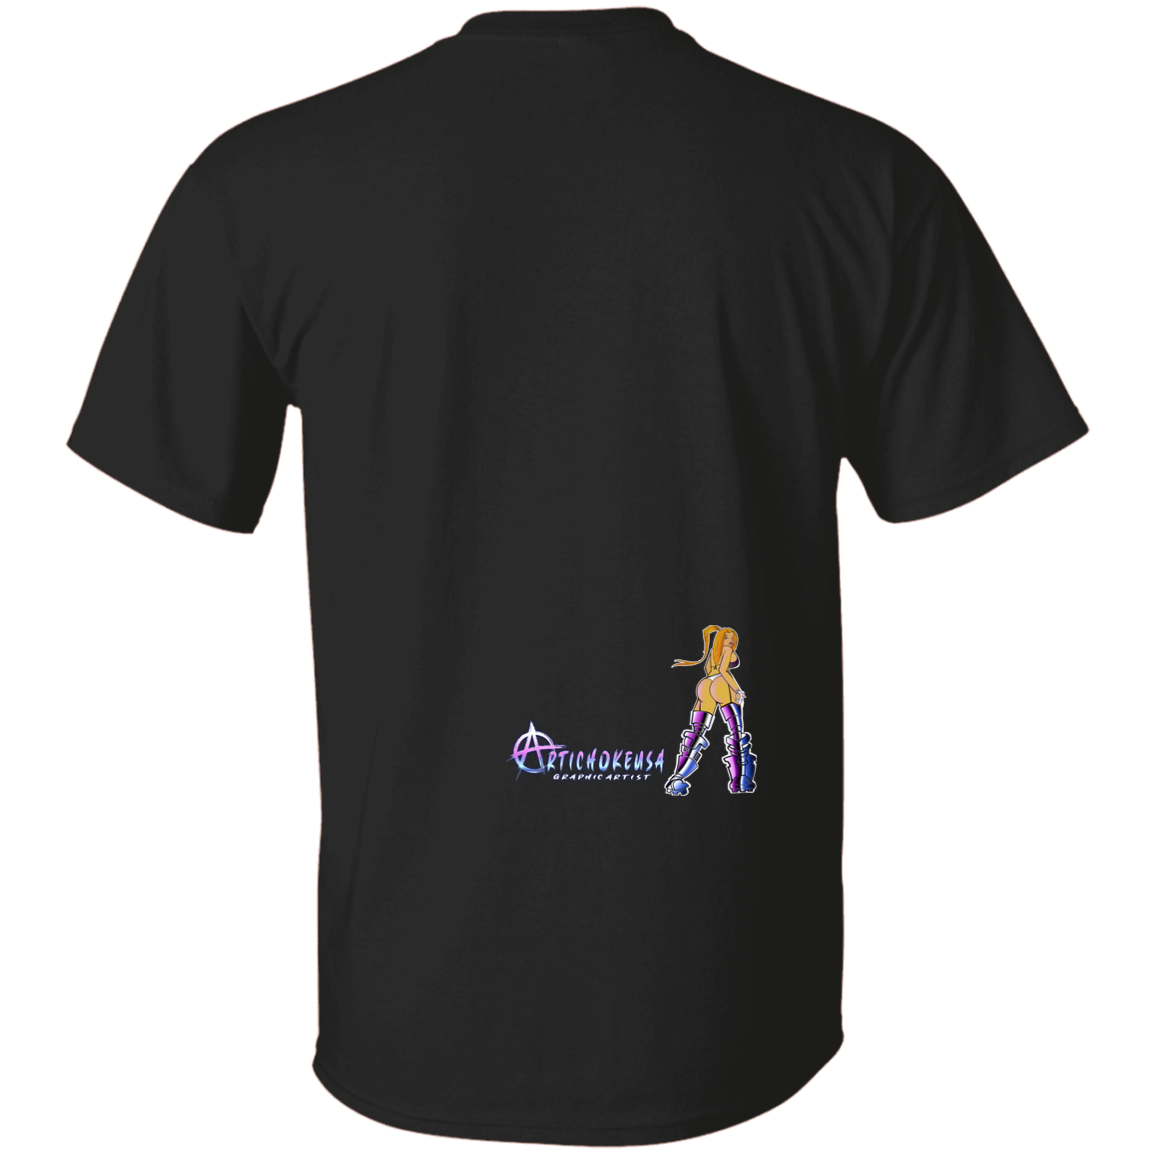 ArtichokeUSA Character and Font design. Let's Create Your Own Team Design Today. Dama de Croma. 100% Cotton T-Shirt